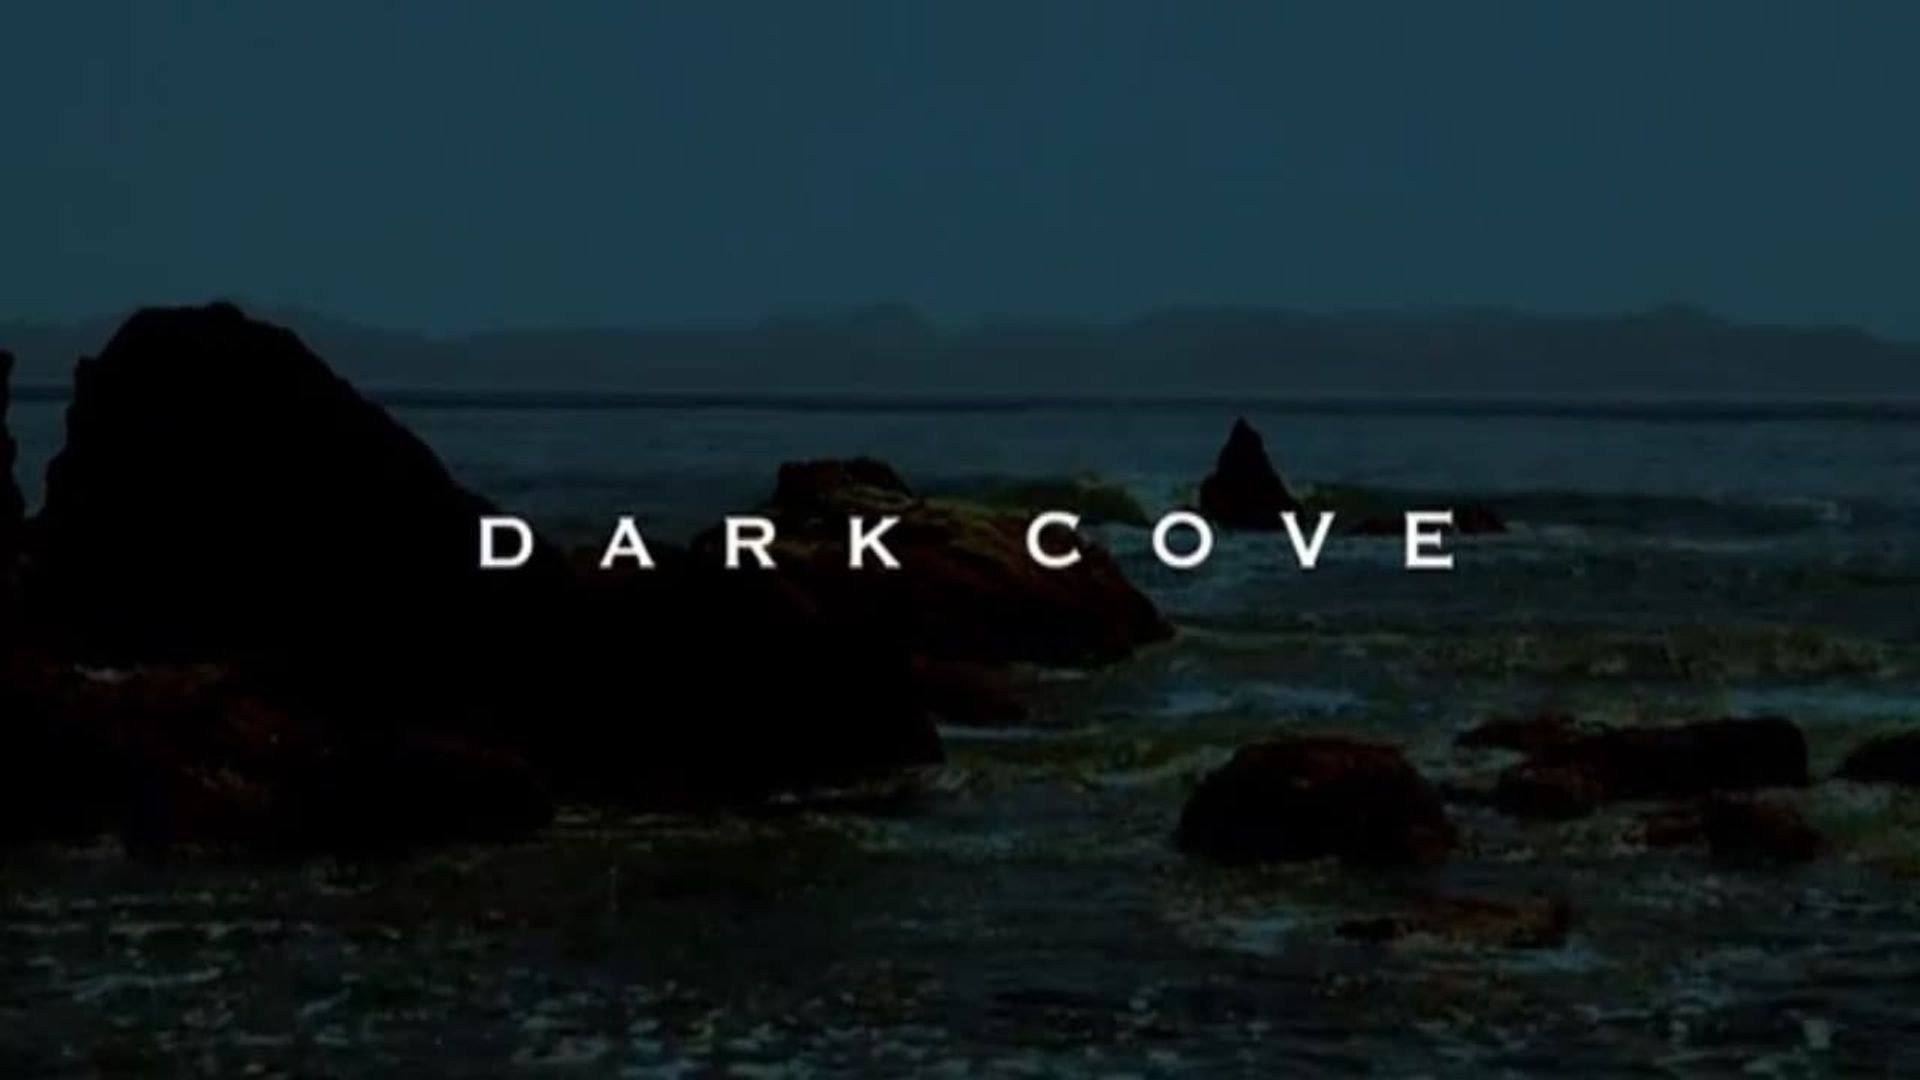 Dark Cove background